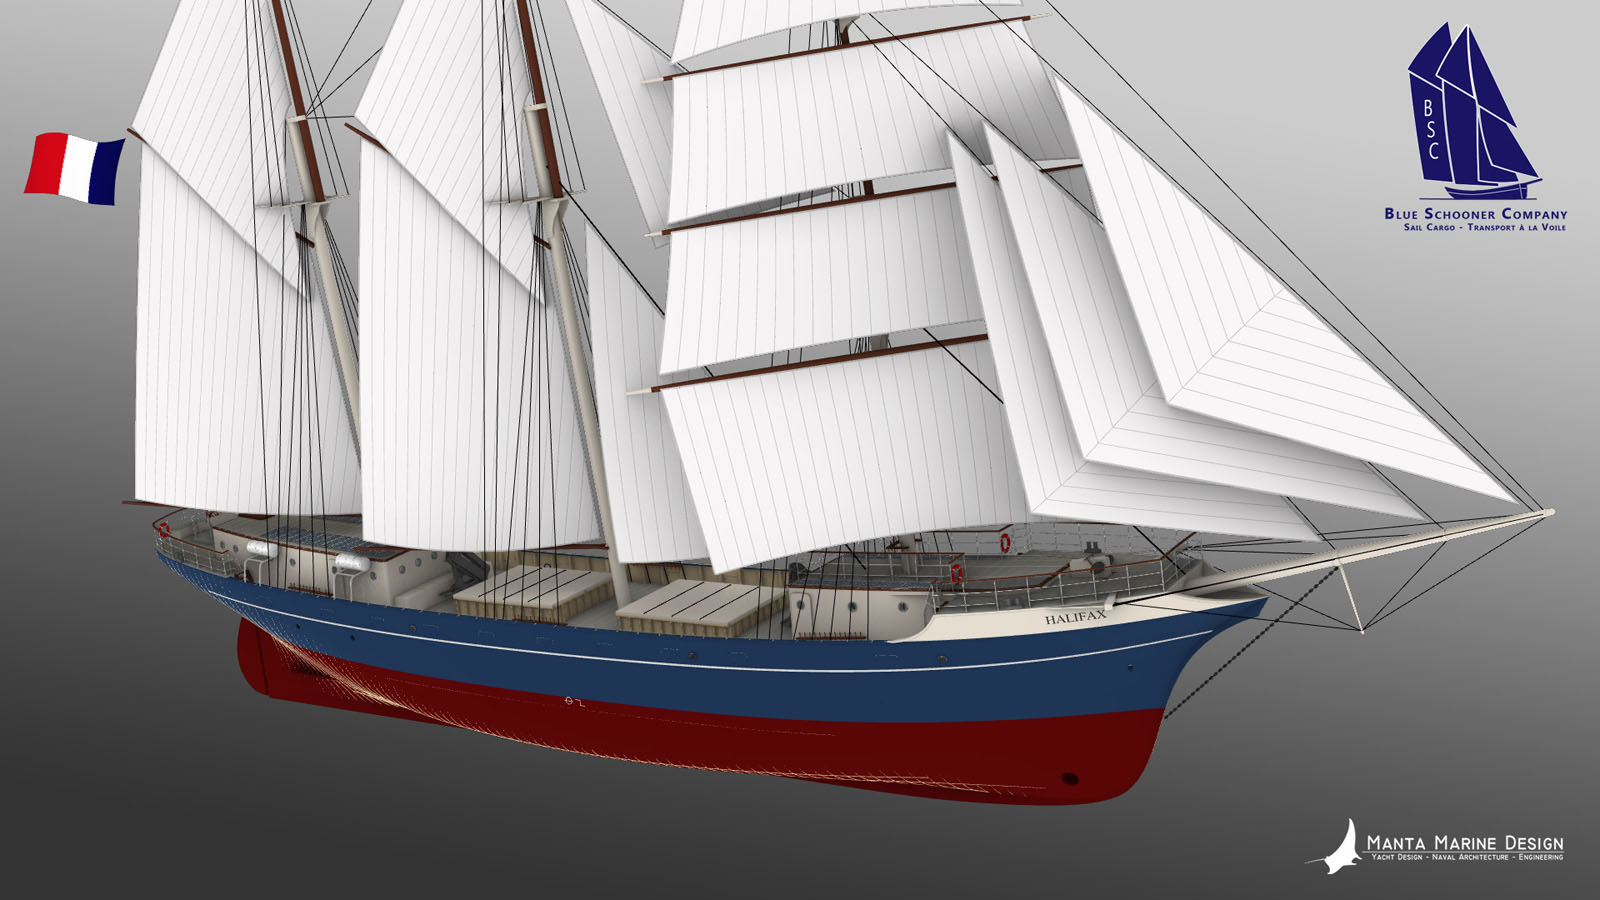 MantaMarineDesign SailingCargoVessel Halifax BlueSchoonerCompany 5